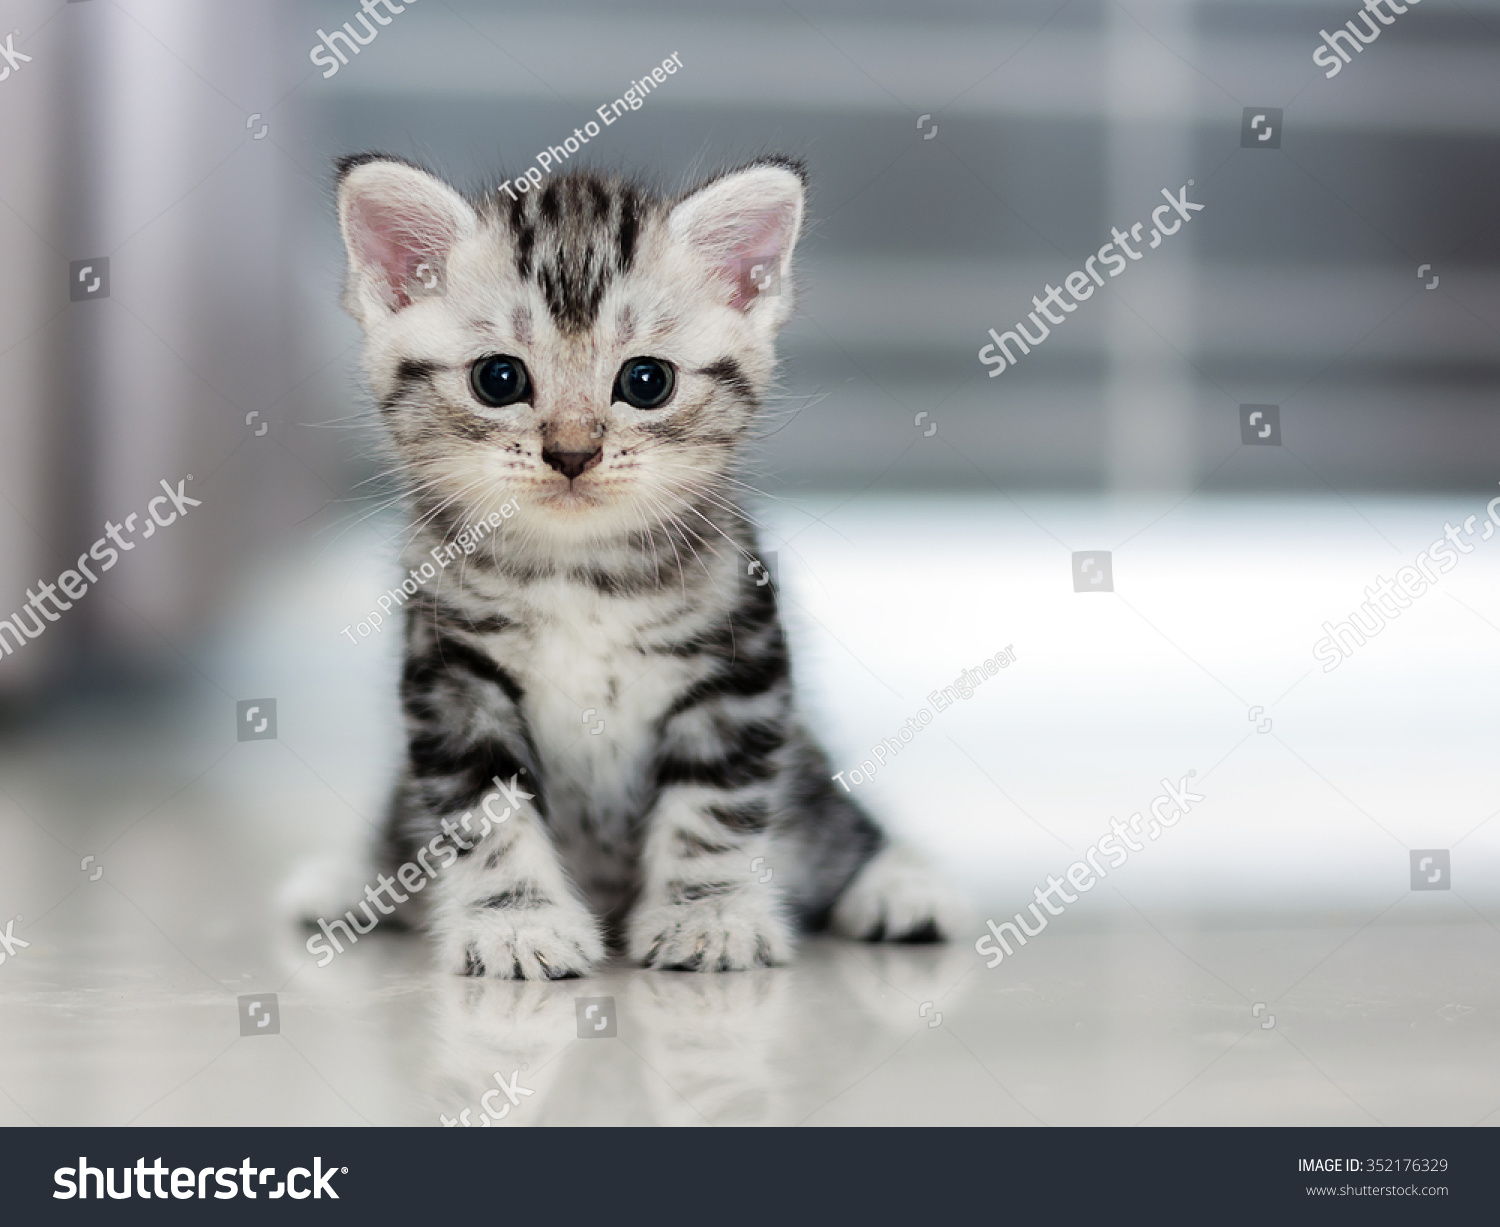 Cute American shorthair cat kitten #352176329